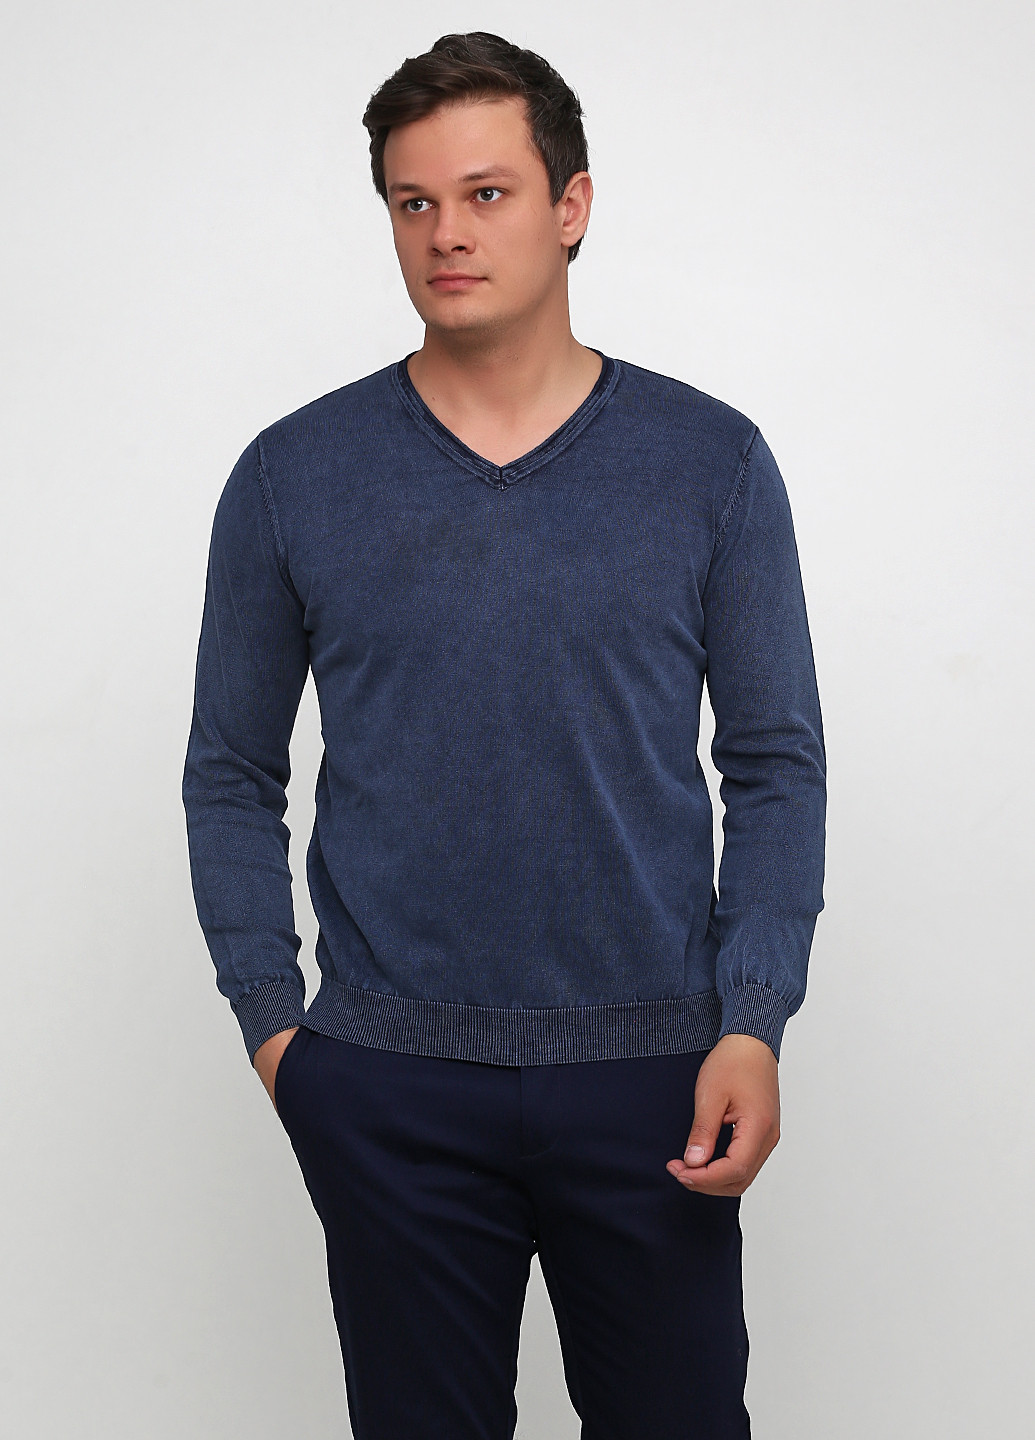 Темно-синий демисезонный пуловер пуловер Cashmere Company